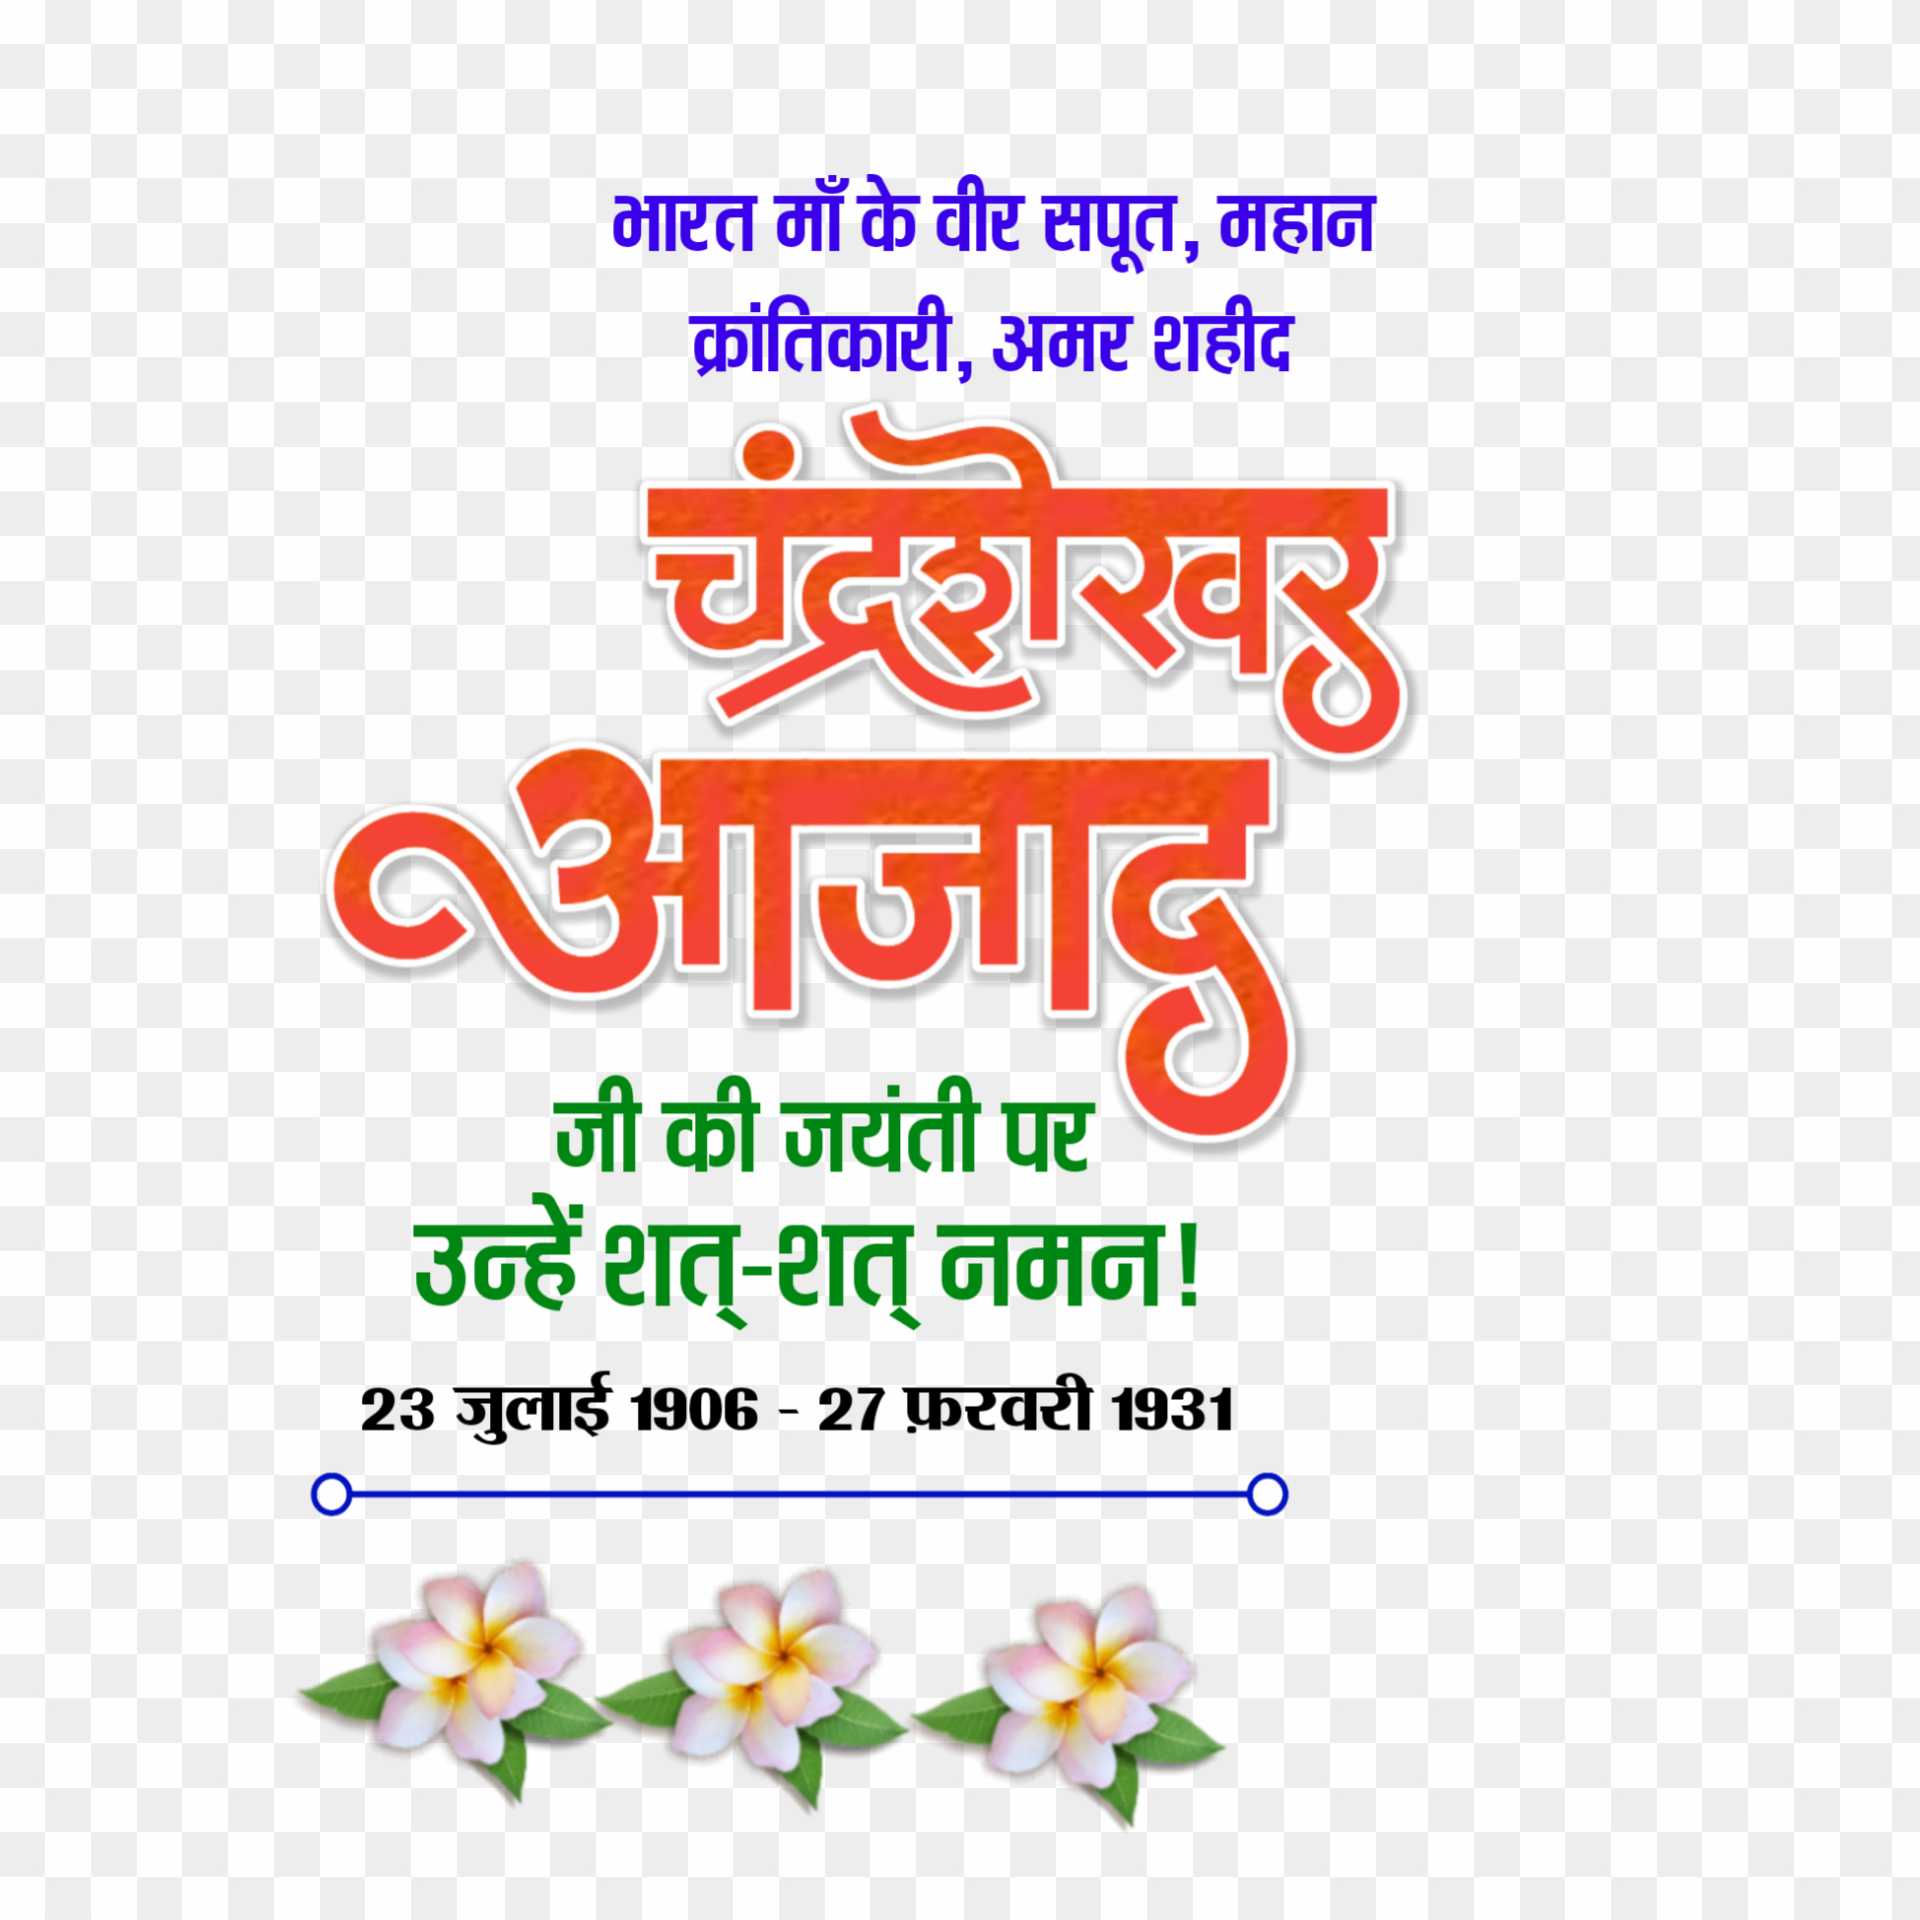 Chandrashekhar Azad Jayanti banner editing PNG images download